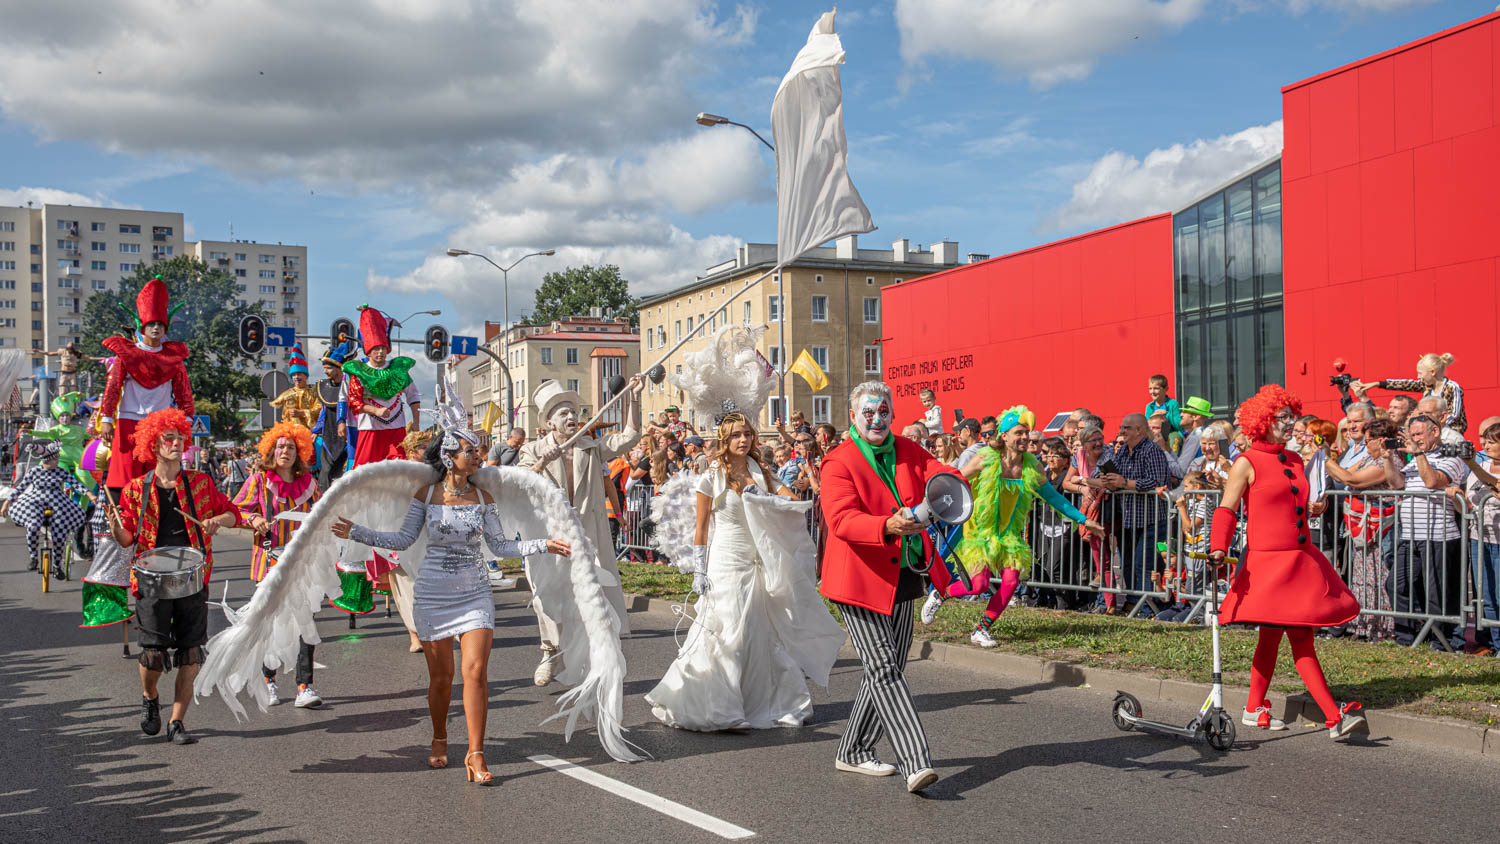 The Parade Korowod Winobraniowy Zielona Gora, Poland